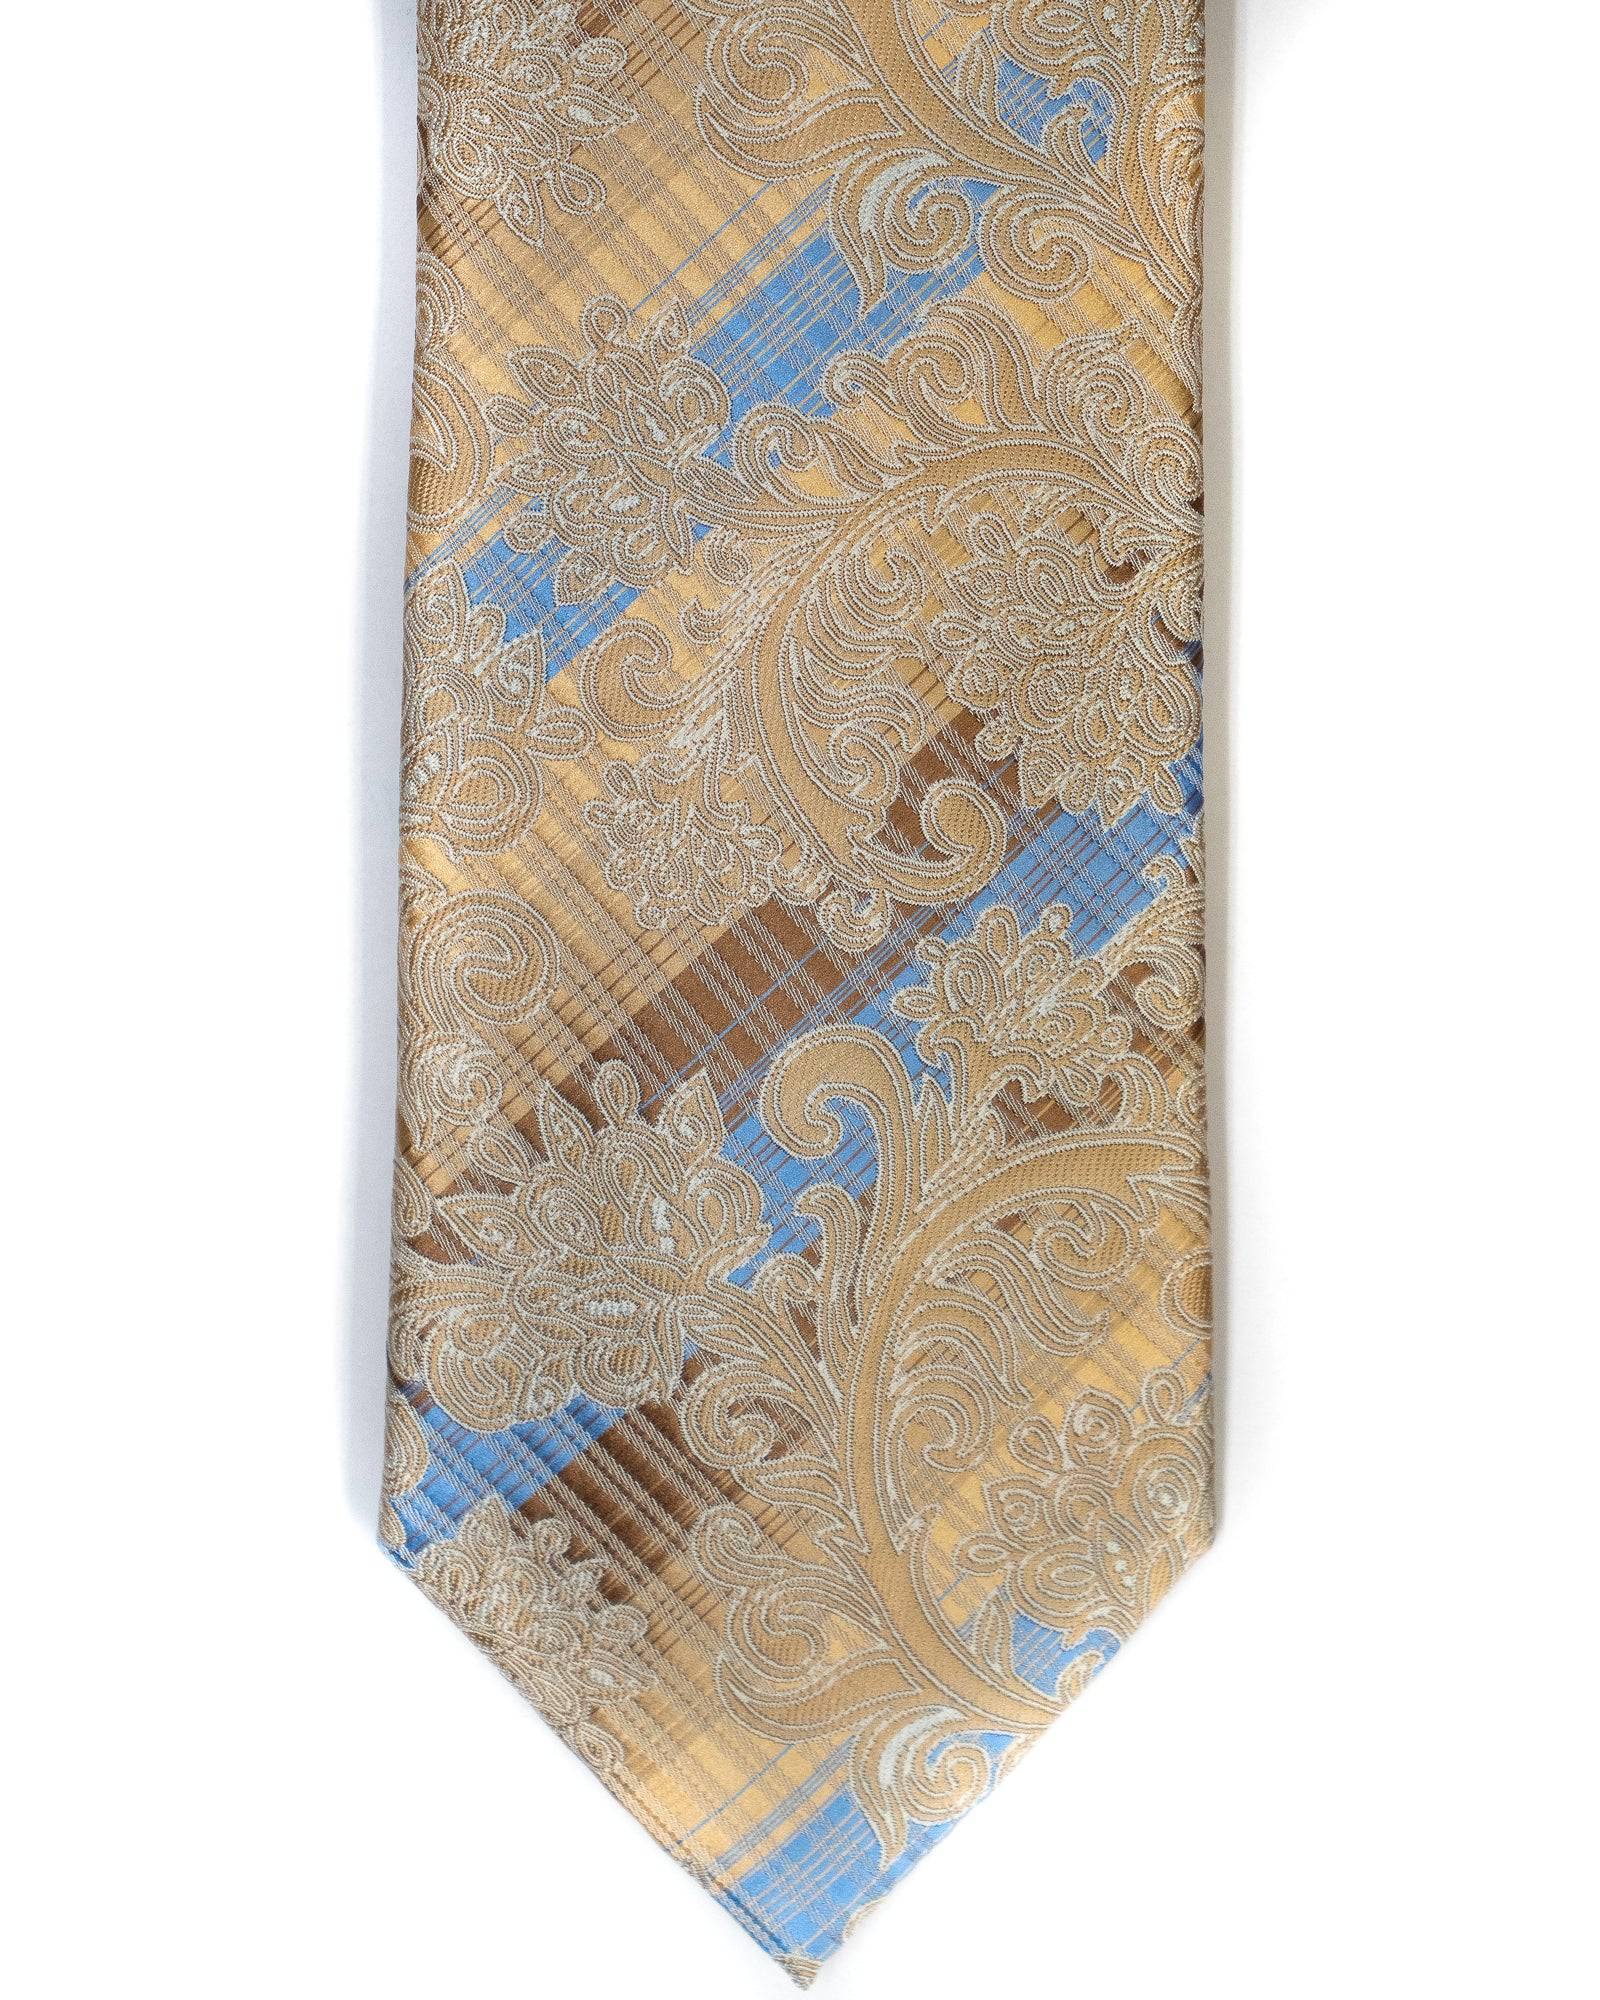 Venturi Uomo Paisley Tie in Tan with Light Blue - Rainwater's Men's Clothing and Tuxedo Rental